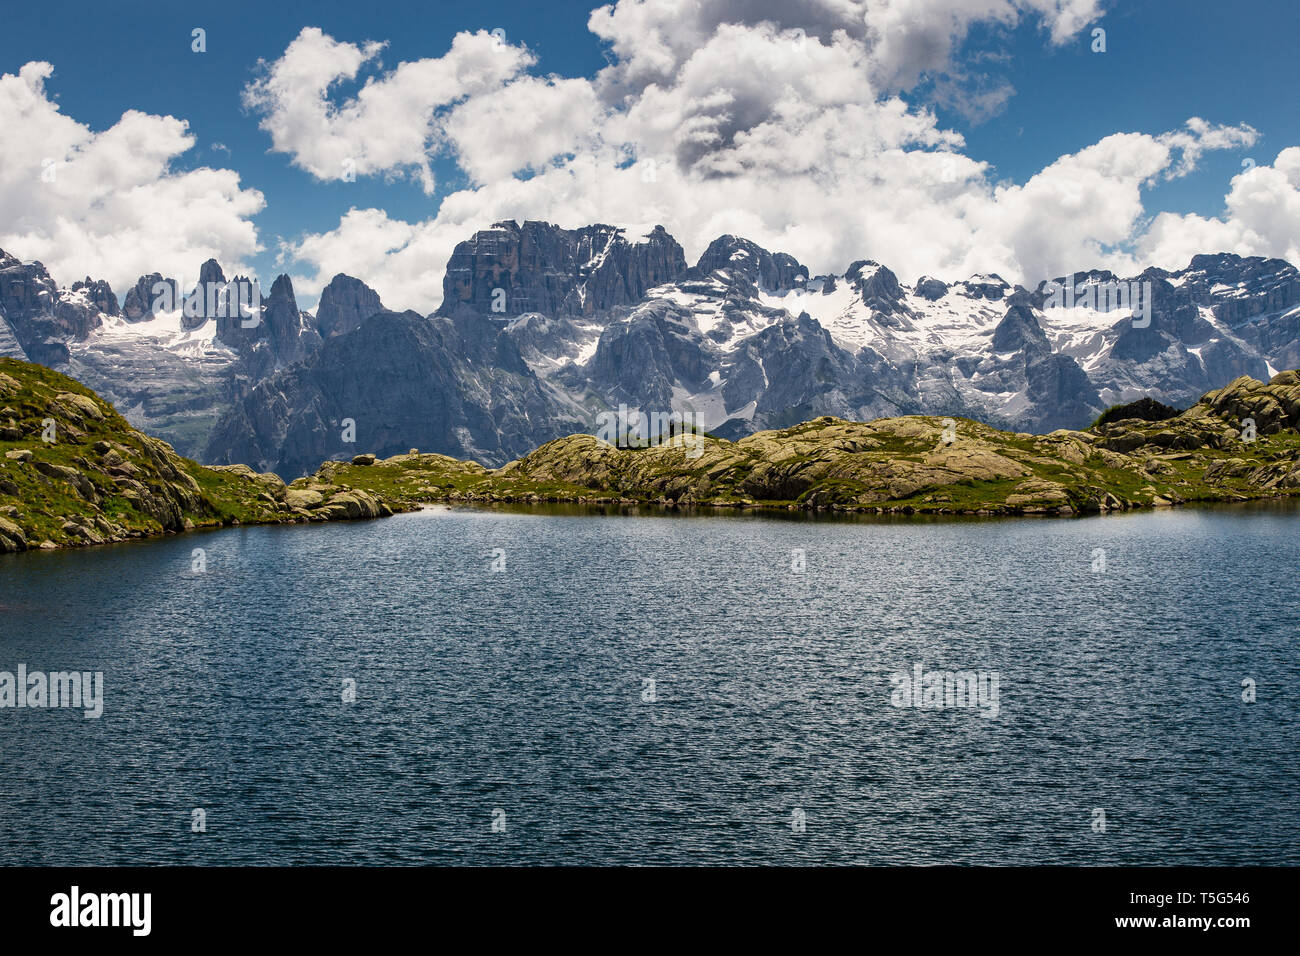 The Brenta Dolomites, view from 'Lago Nero' alpine lake. Cornisello, Nambrone valley, Pinzolo. Adamello Brenta Nature Park. Trentino. Italian Alps. Stock Photo